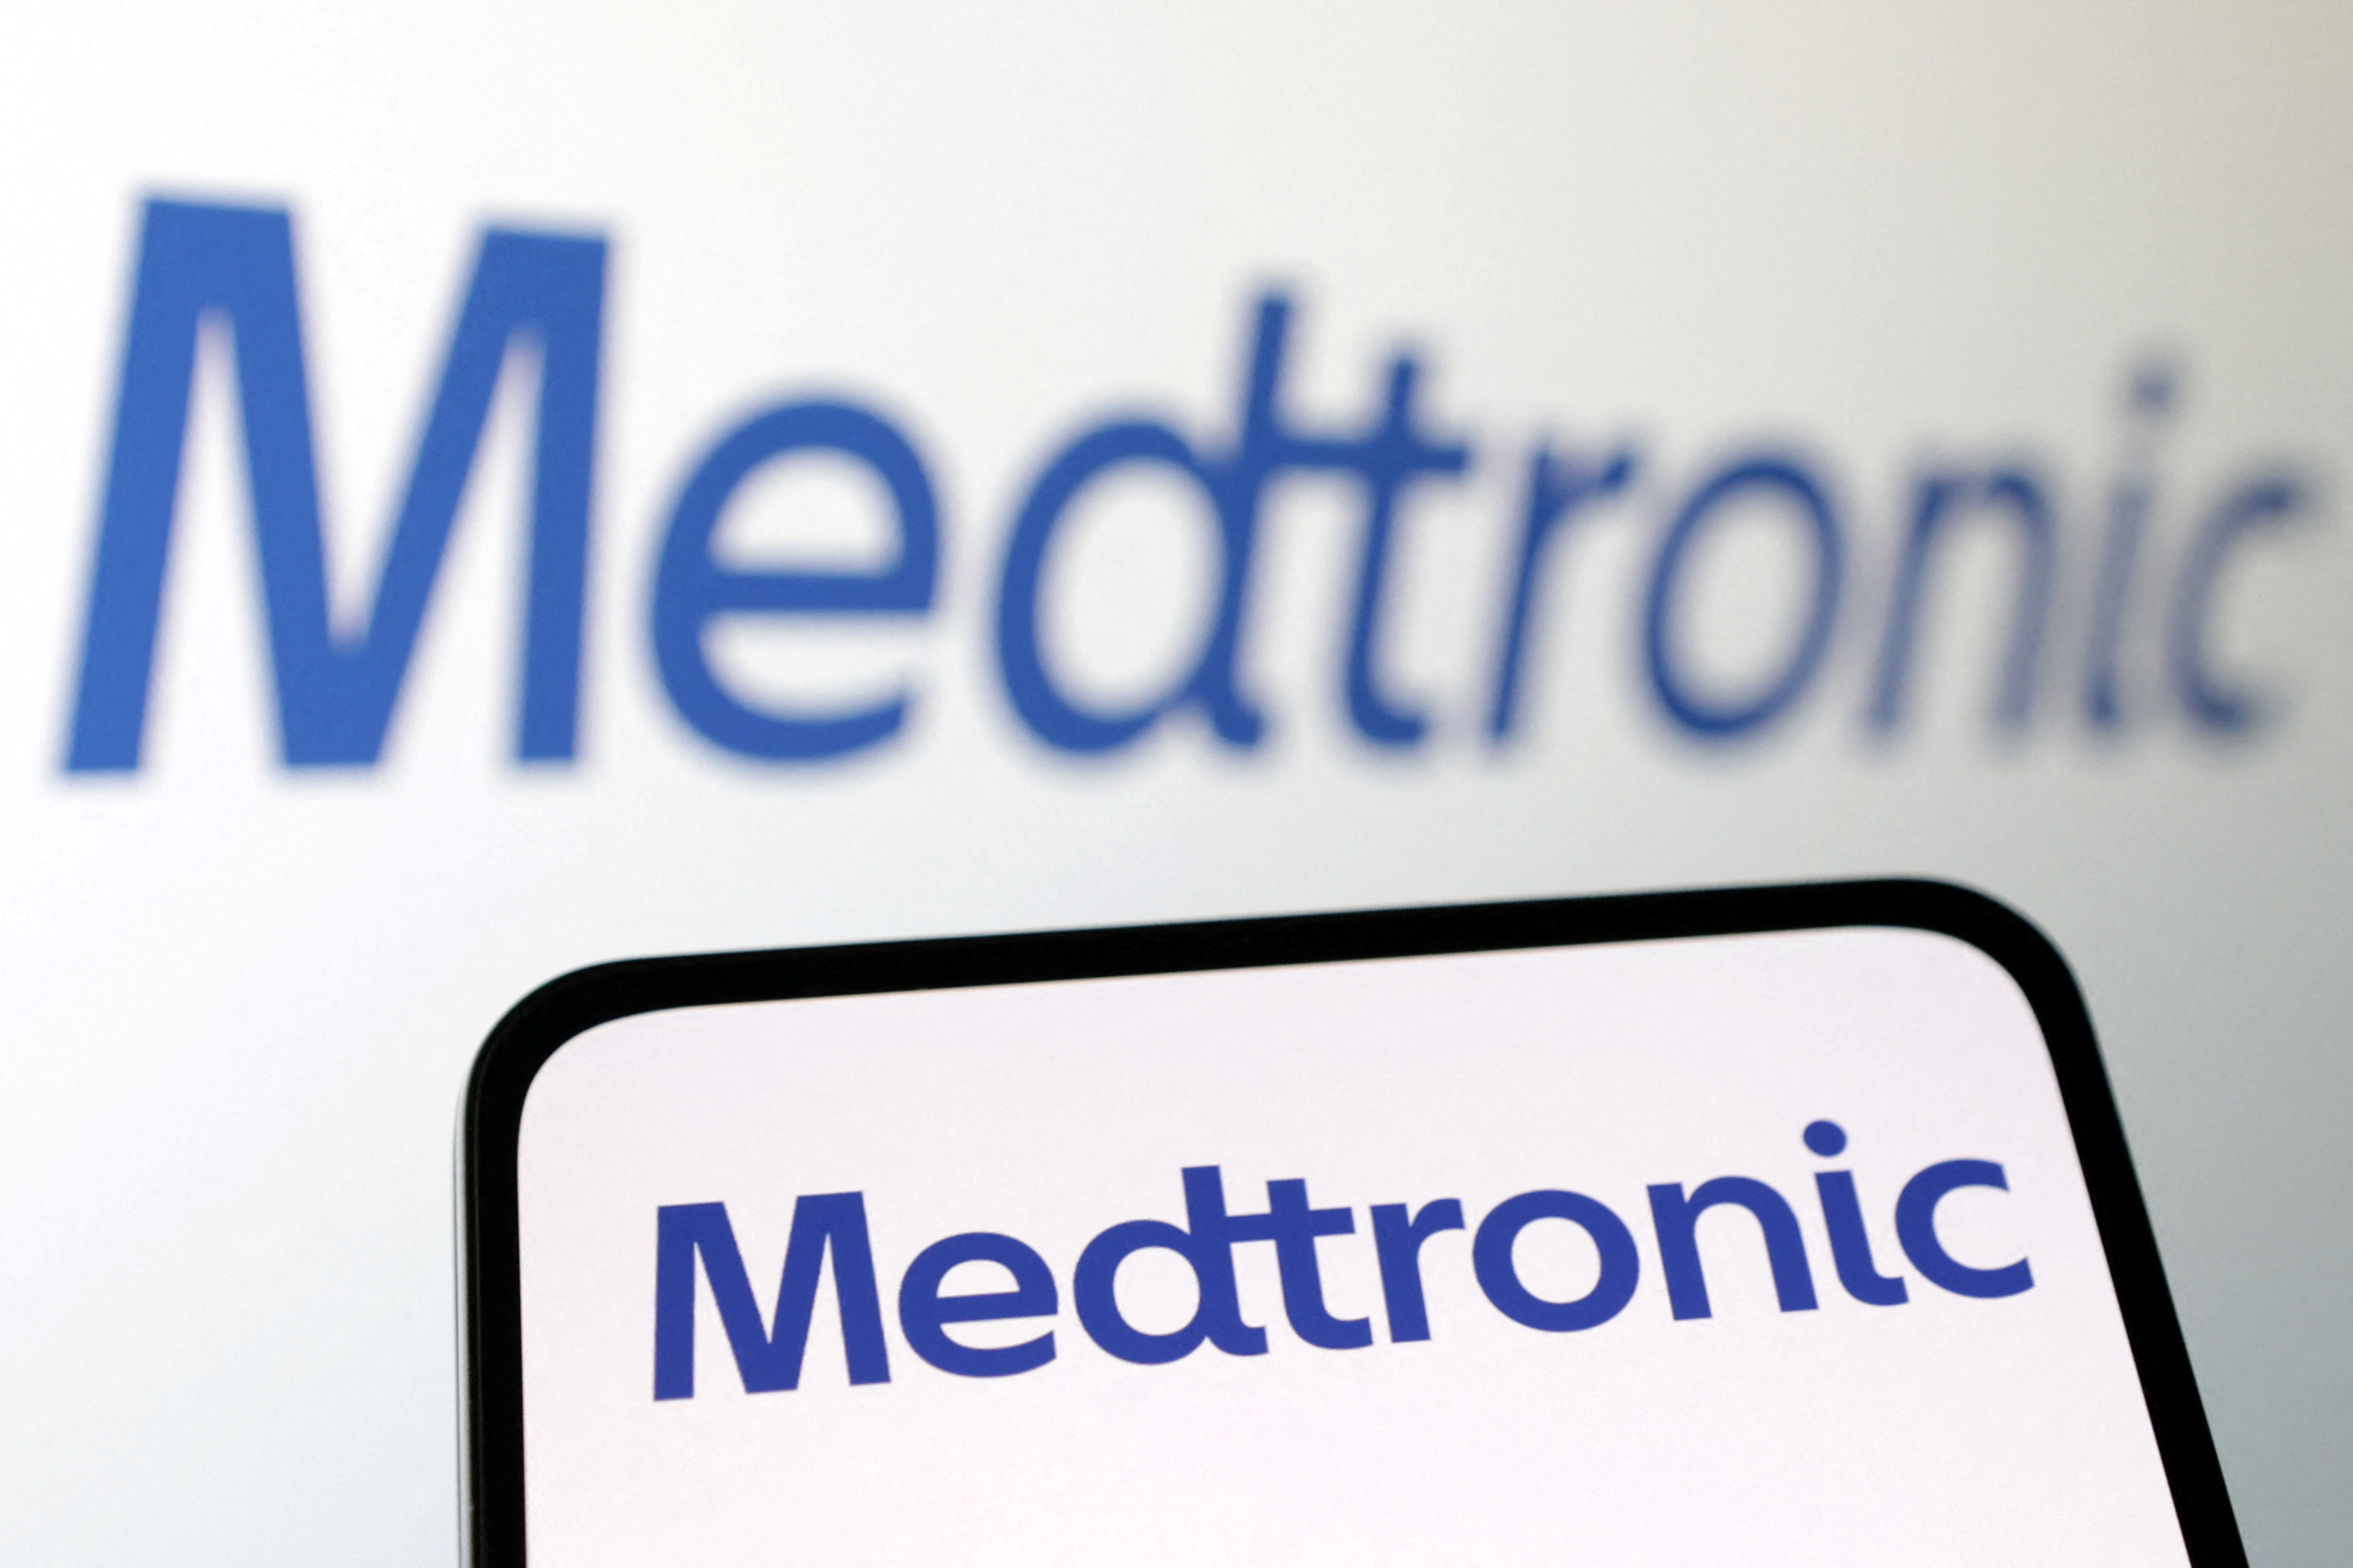 Illustration shows Medtronic Plc logo